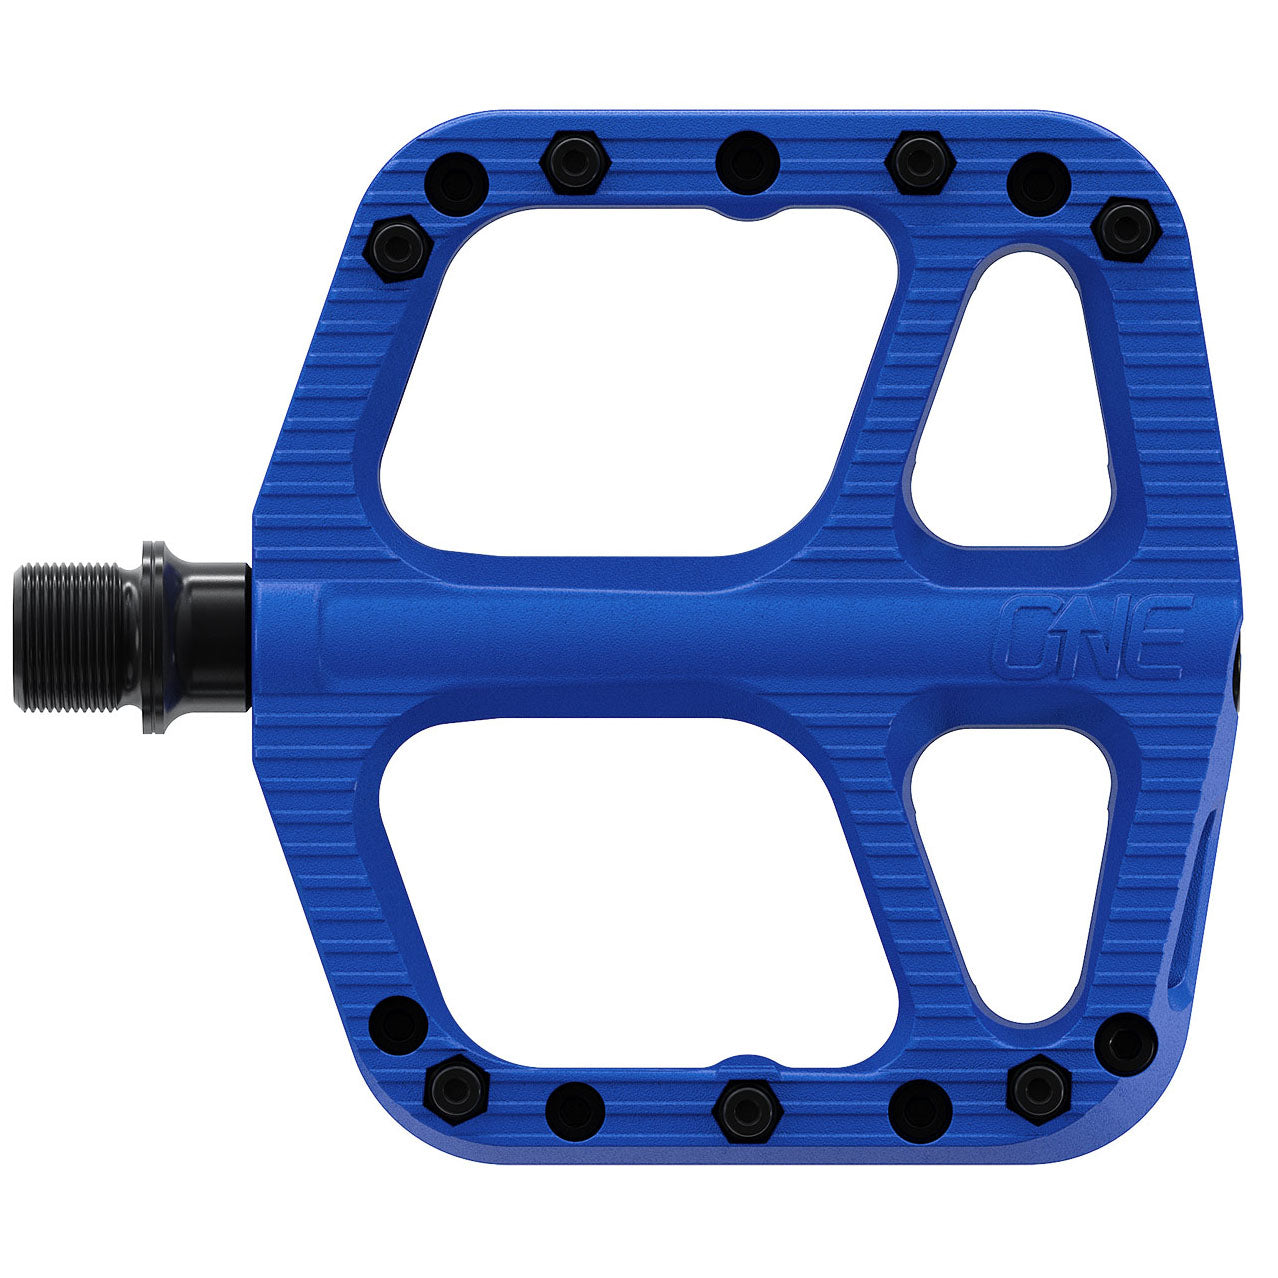 OneUp Components Small Comp Platform Pedals Blue